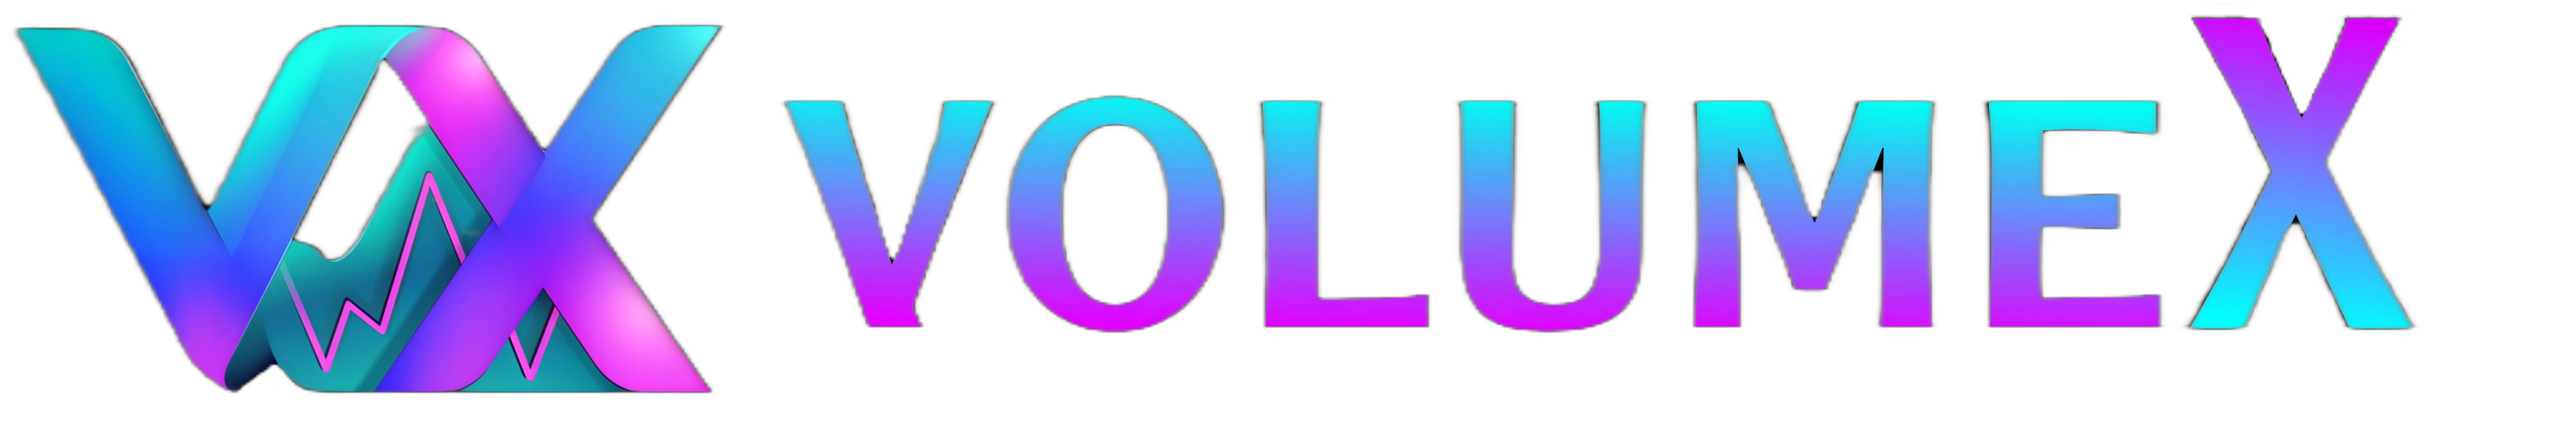 Volume X logo